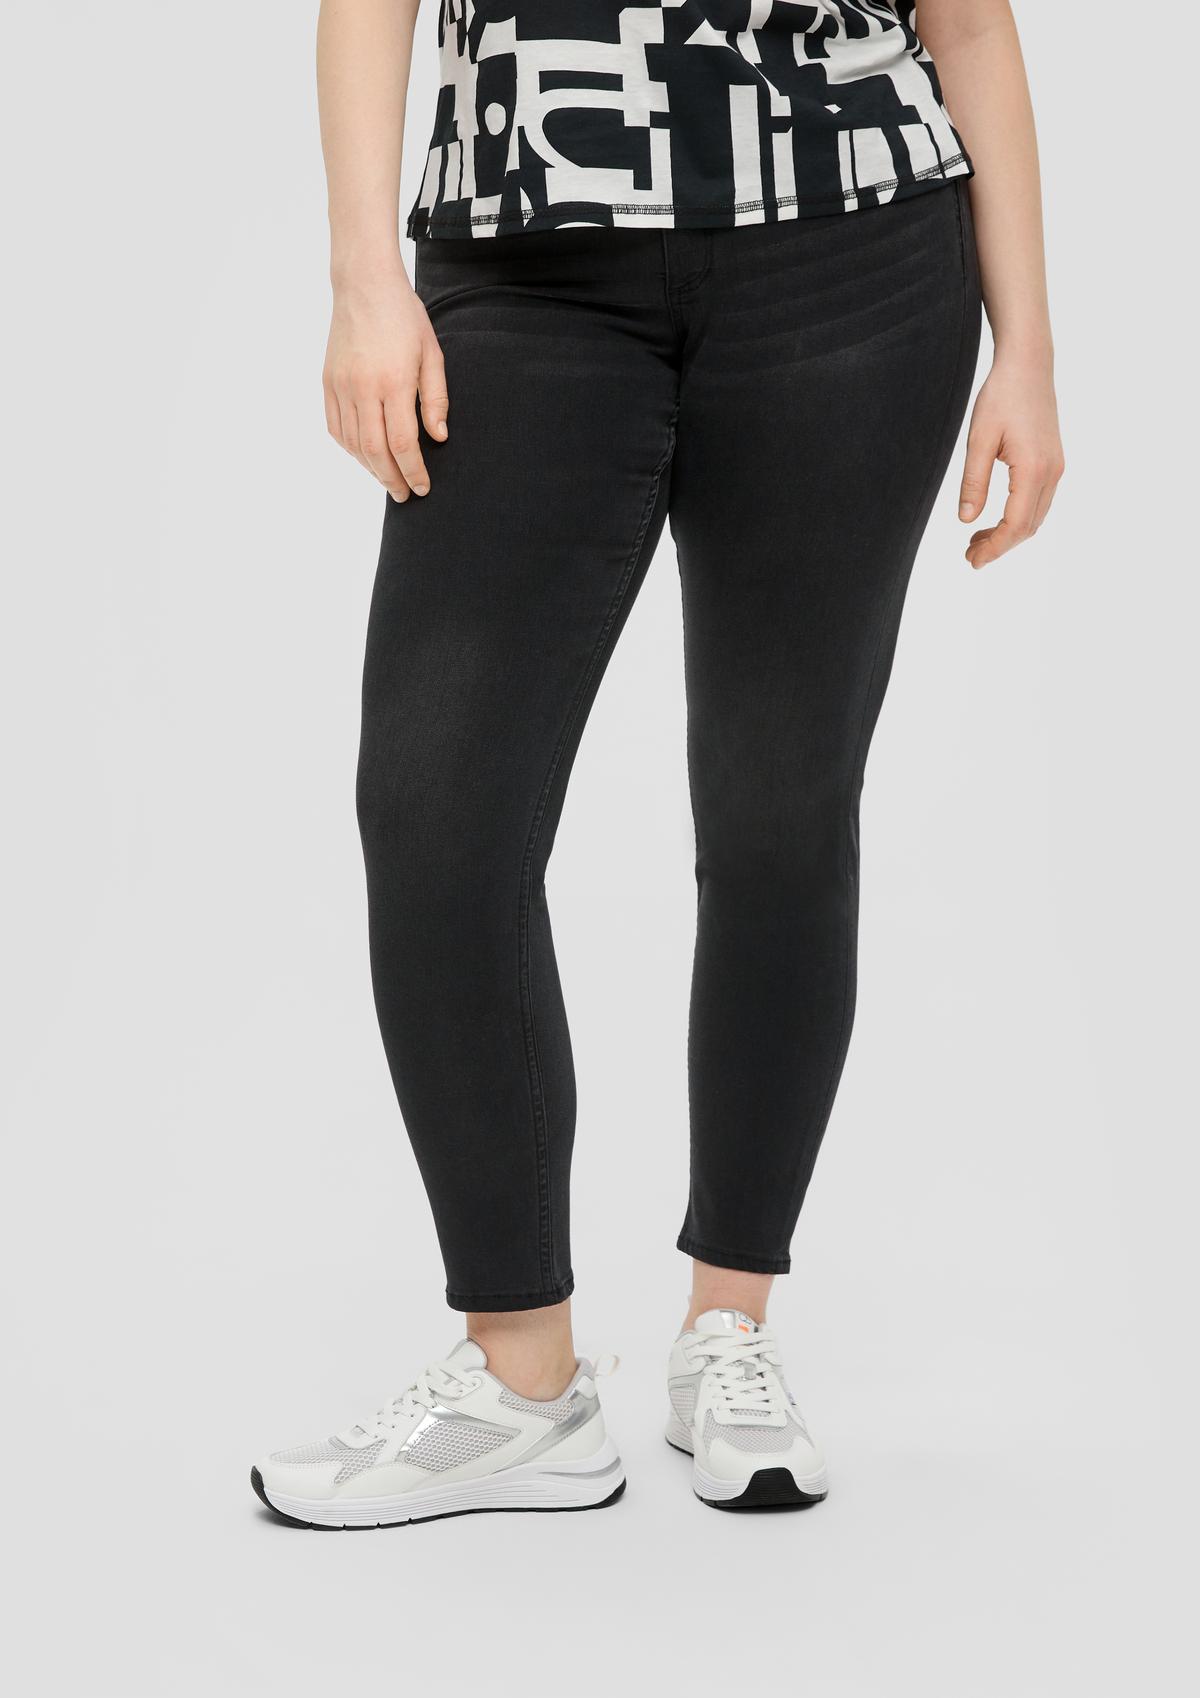 s.Oliver Jeans / skinny fit / mid rise / skinny leg